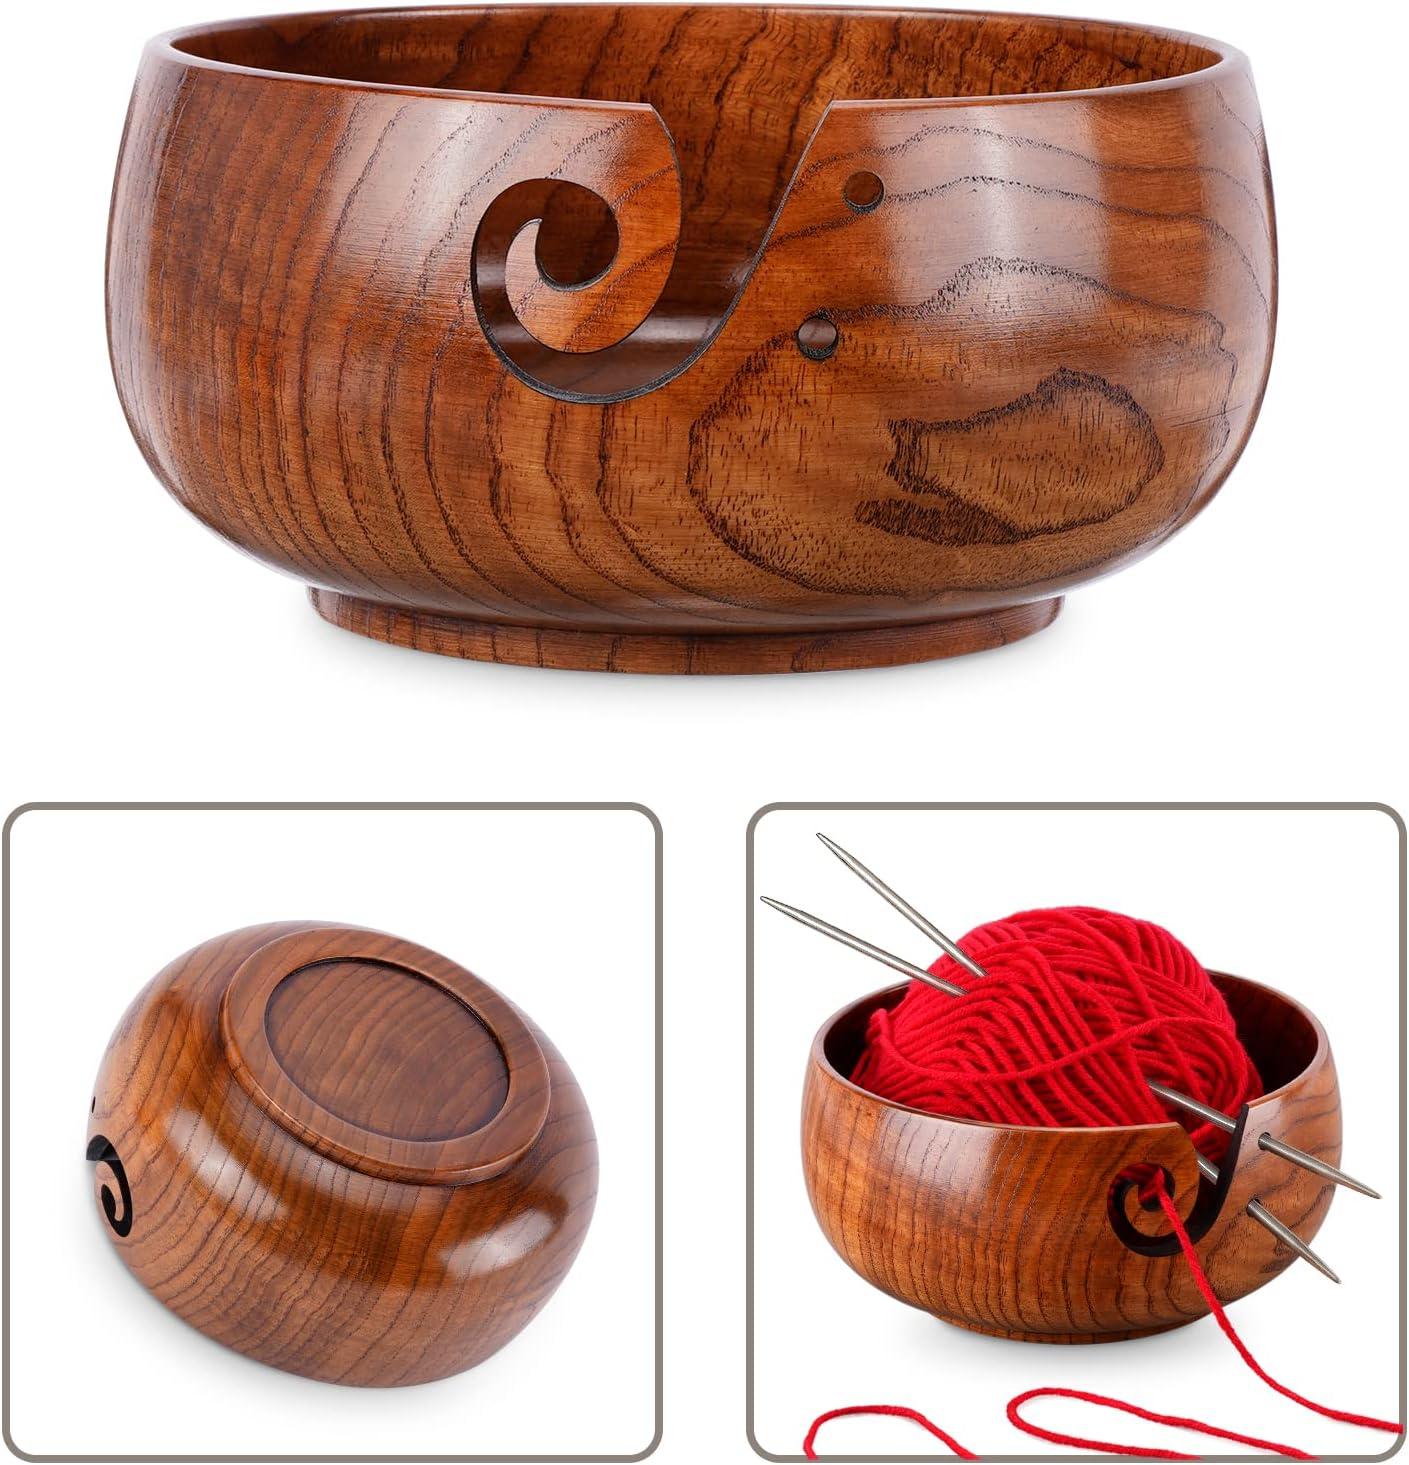 Wooden Yarn Bowl, Crochet Bowl, Knitting Bowl, Big Yarn Bowl, Made